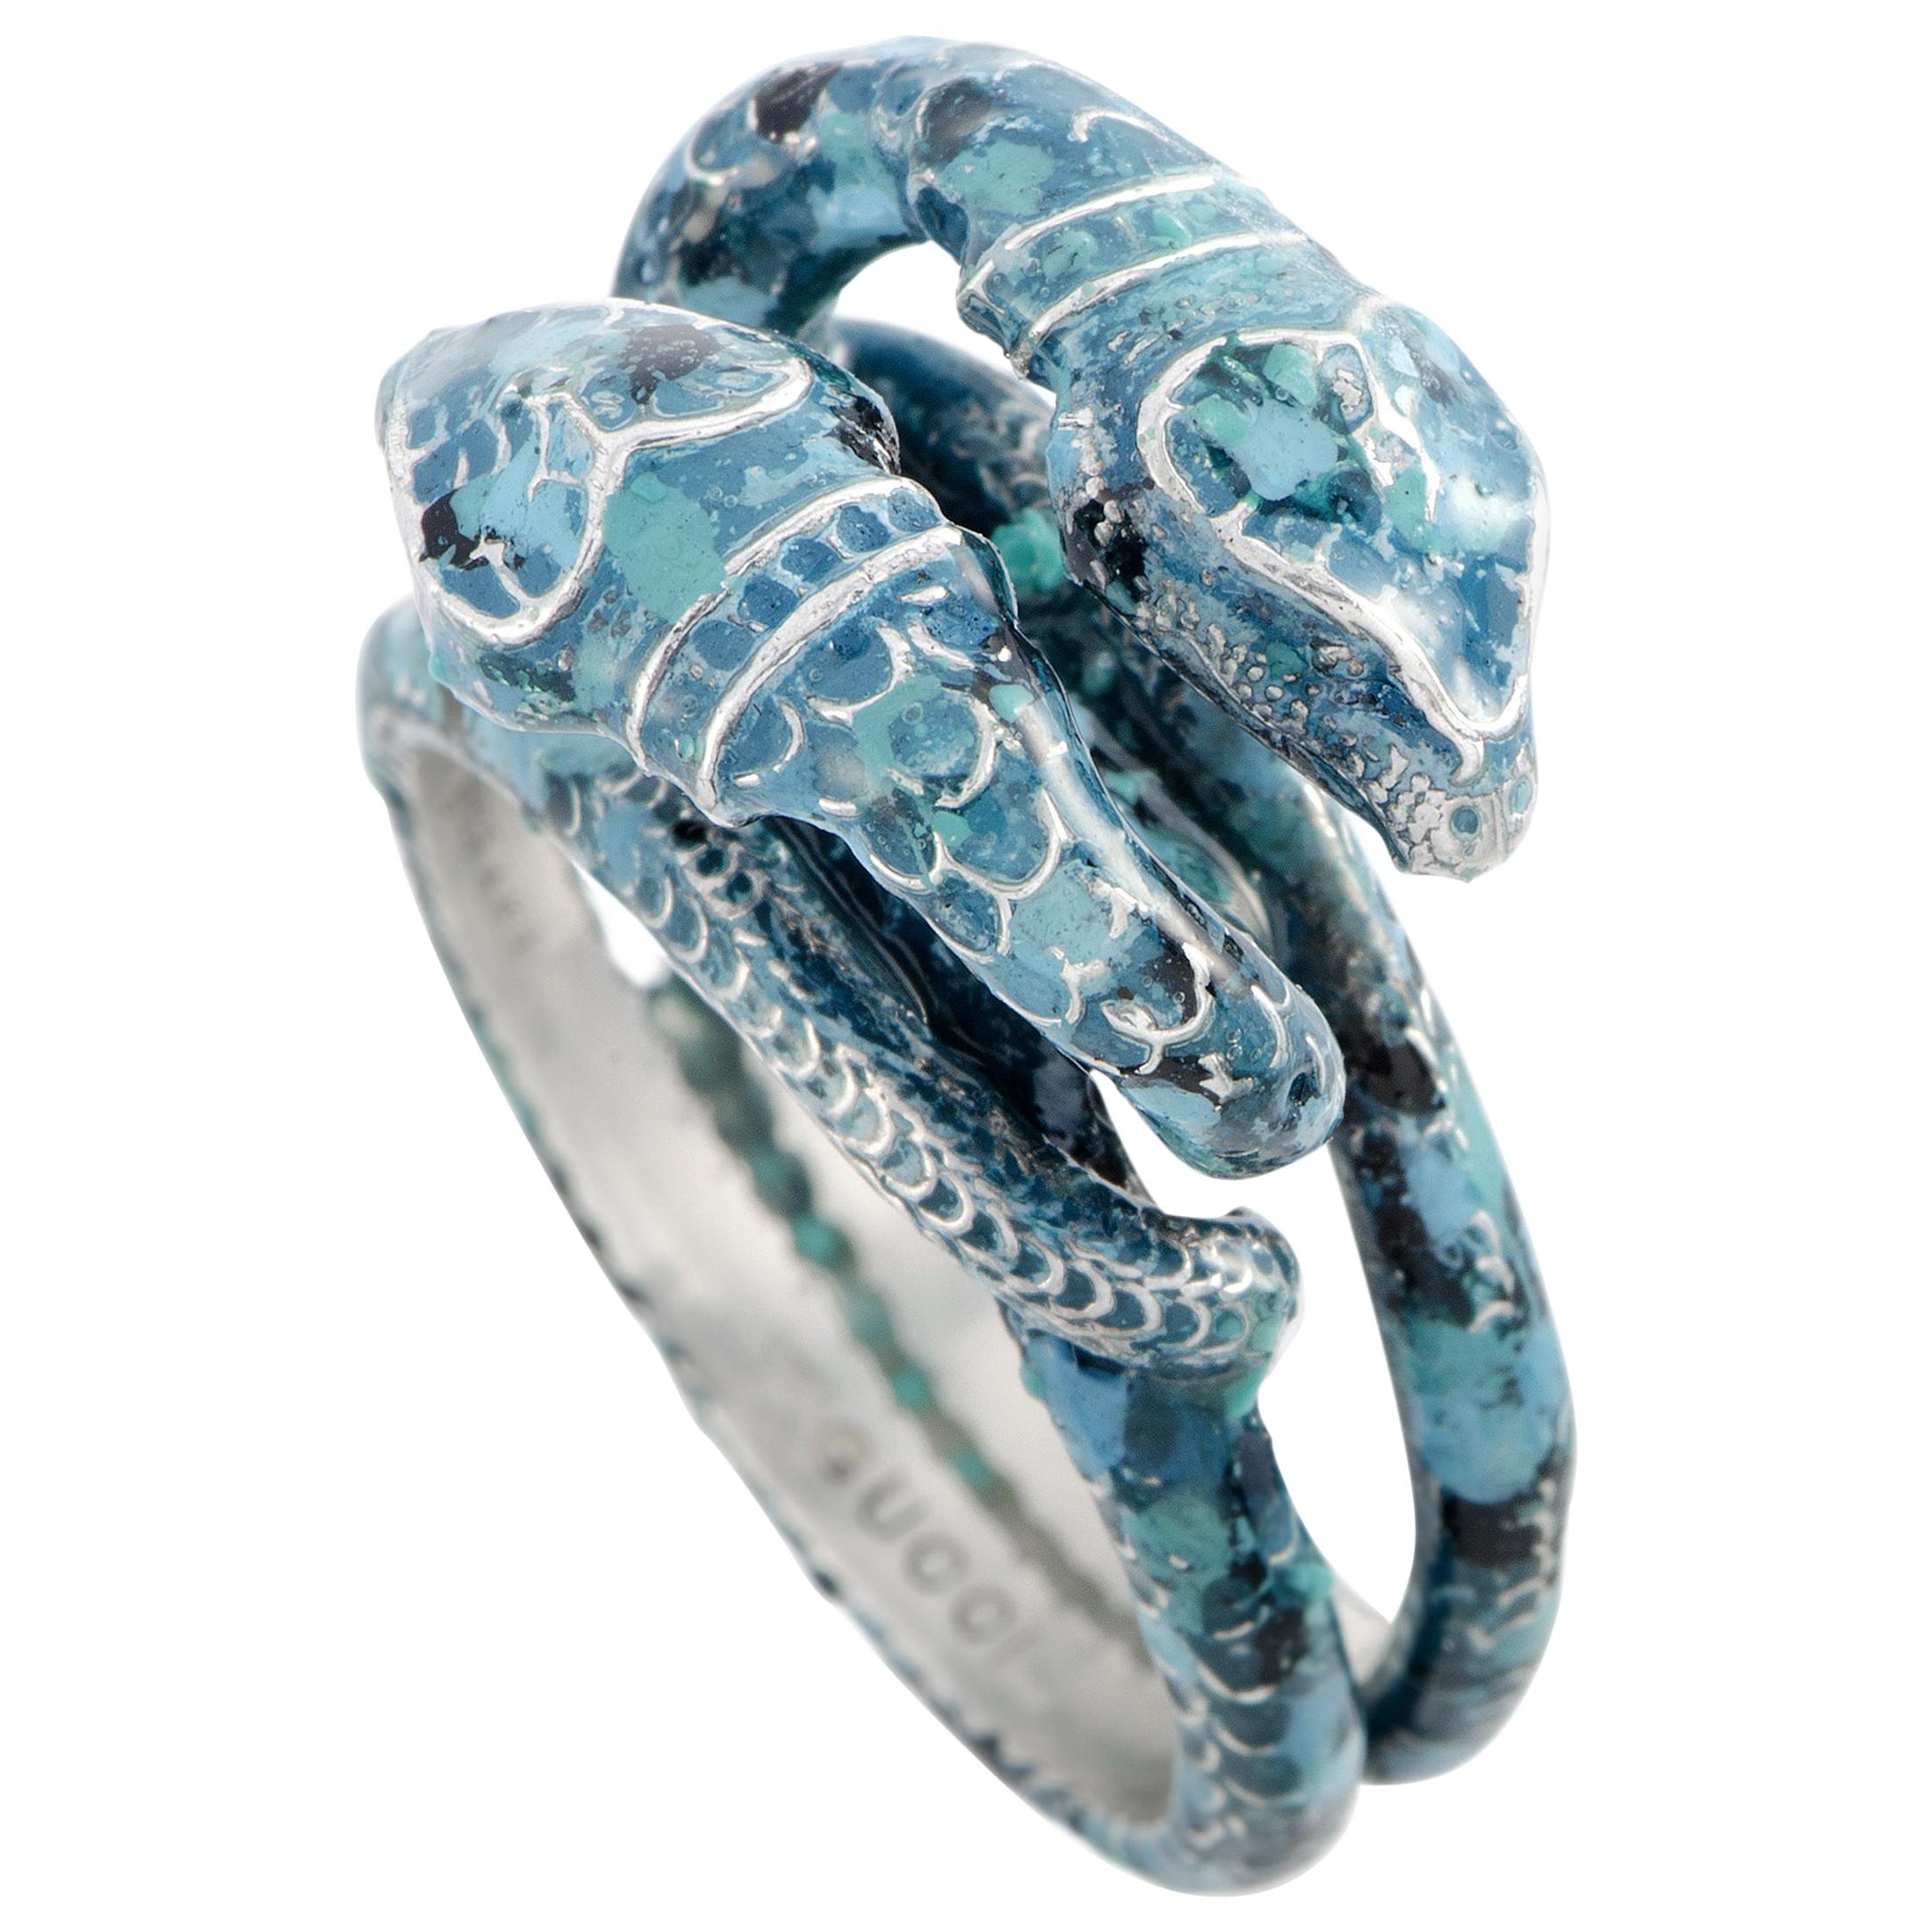 Gucci Garden Silver and Blue Enamel Snake Motif Ring